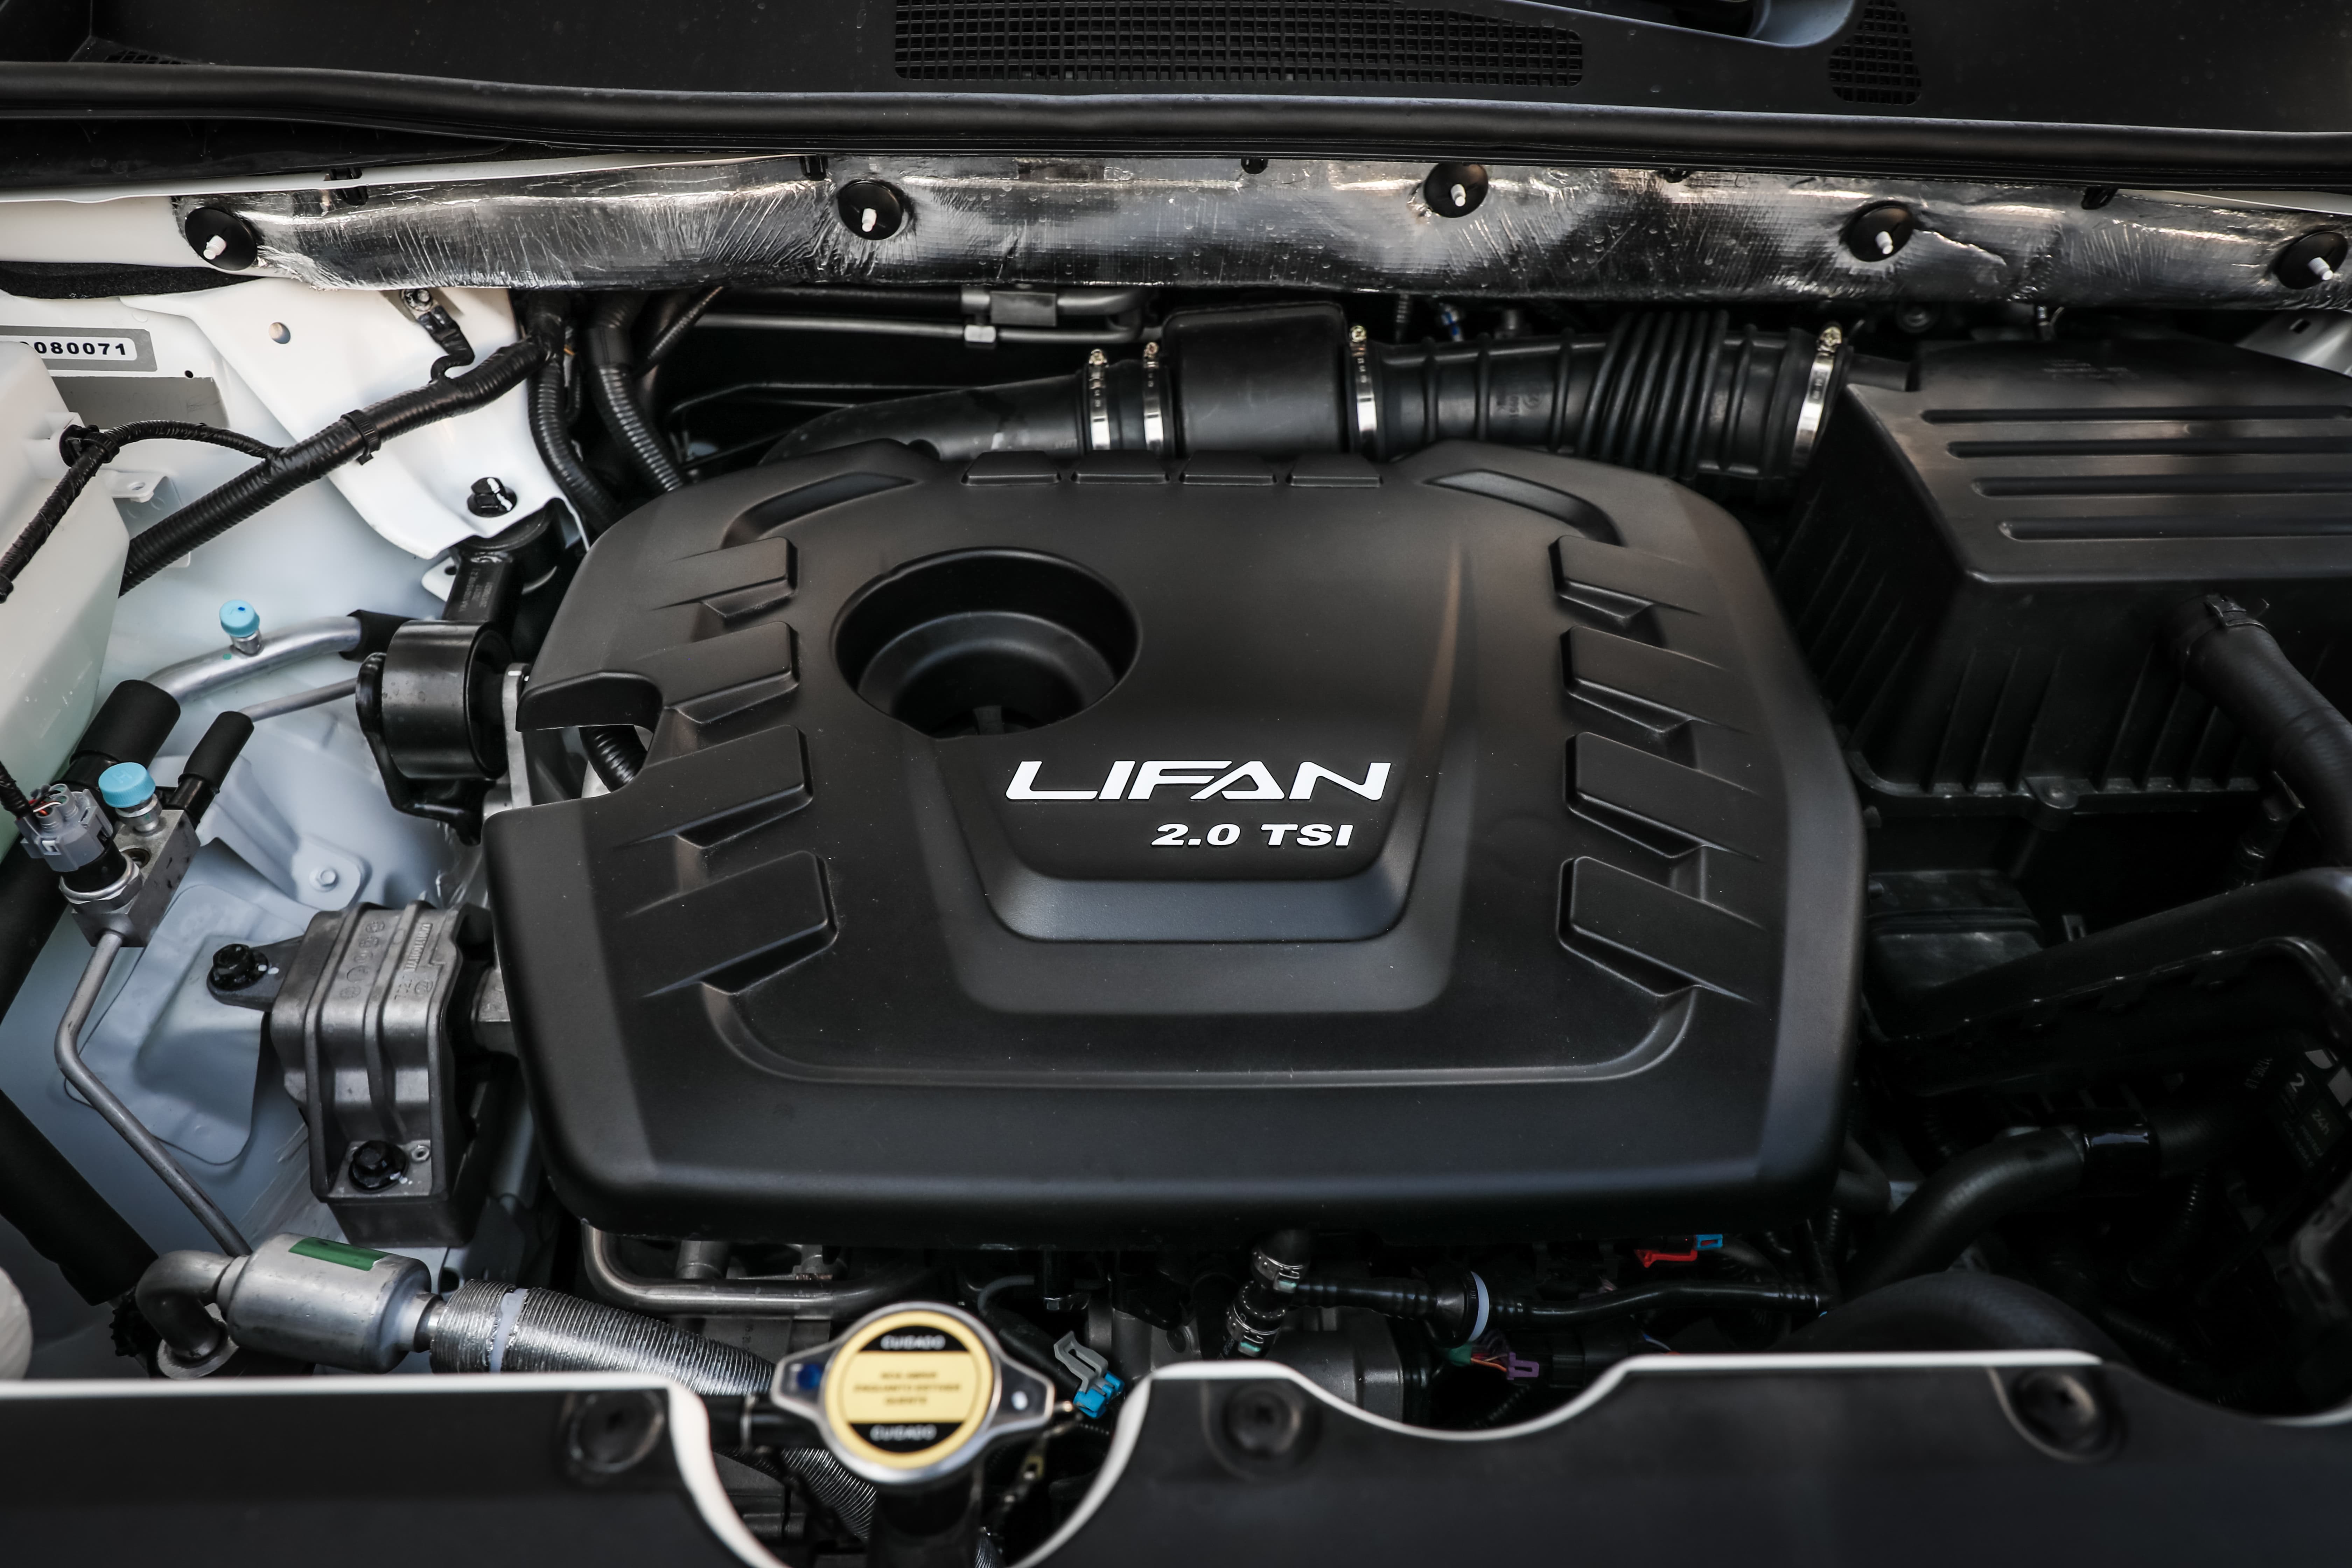  Com motor 2.0 Turbo, o Lifan X80 tem rodar suave